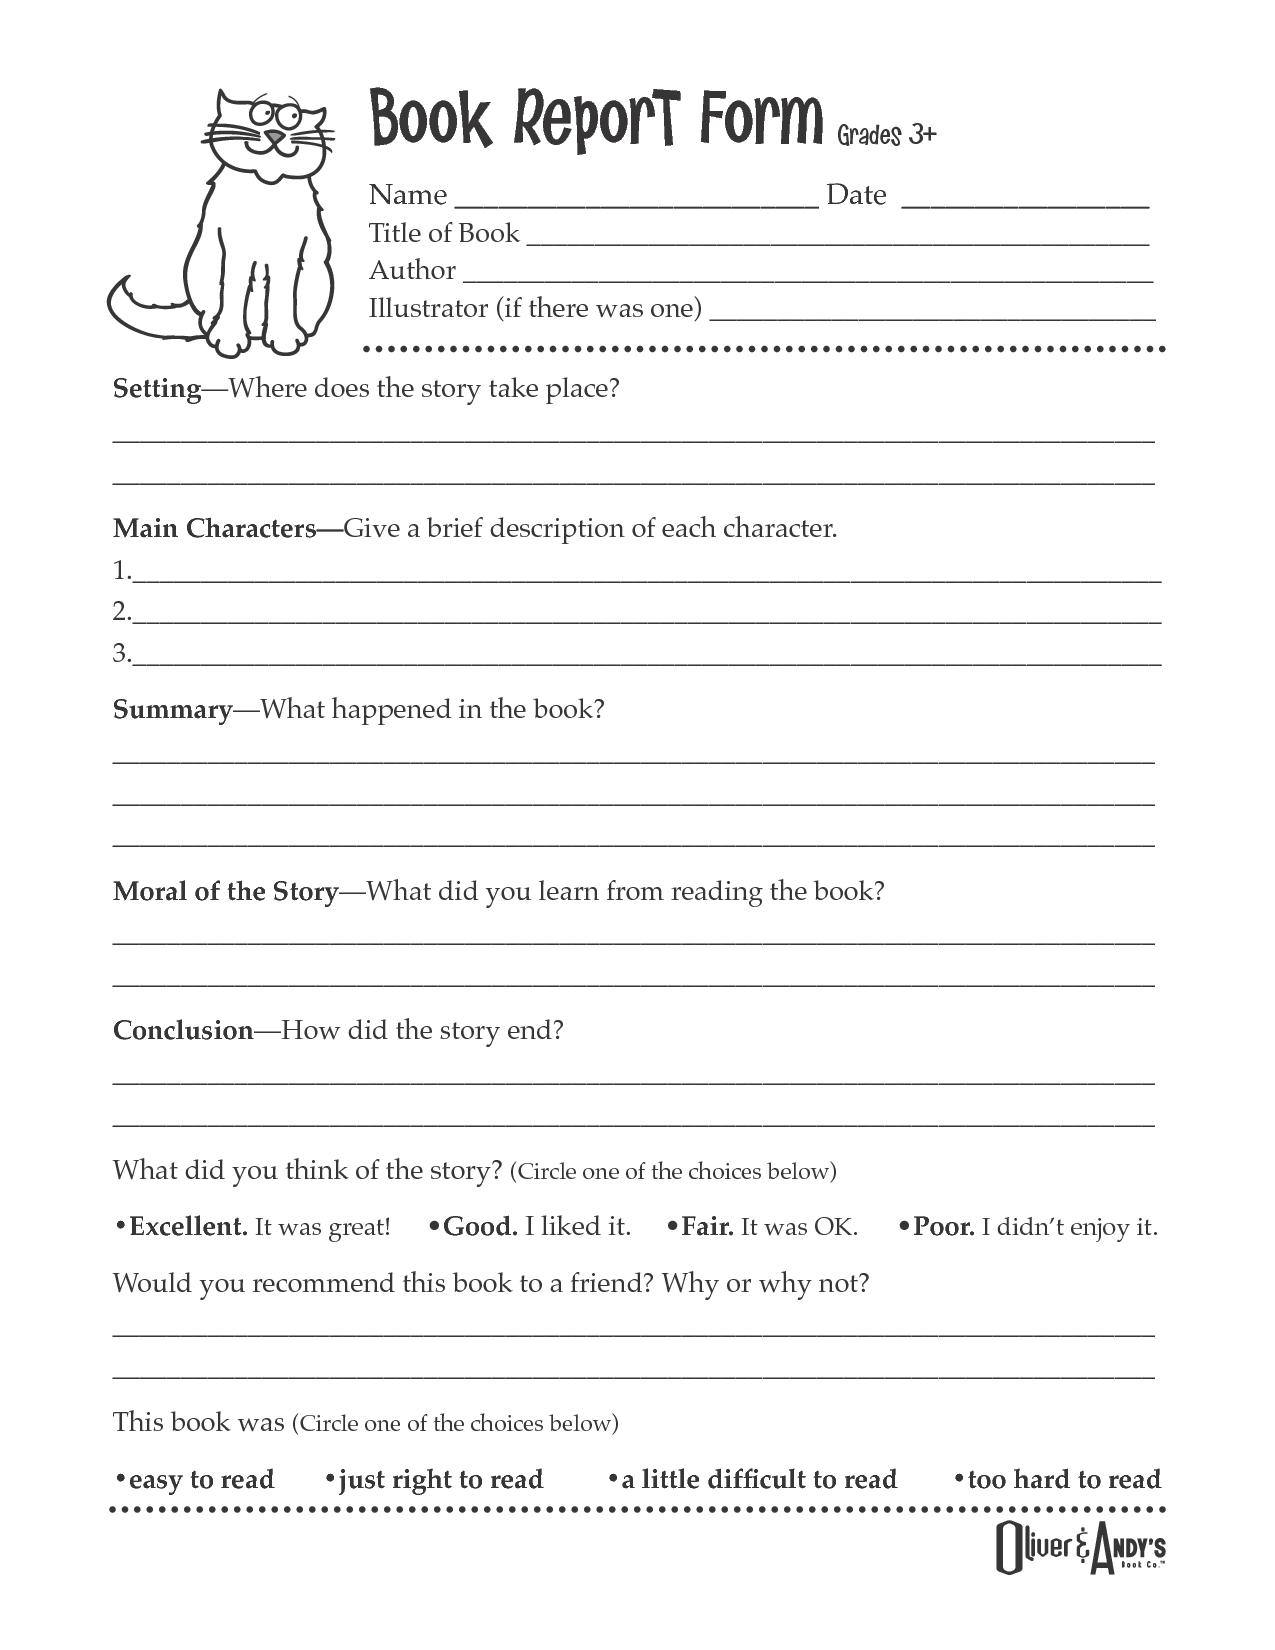 Second Grade Book Report Template | Book Report Form Grades Within Book Report Template 4Th Grade